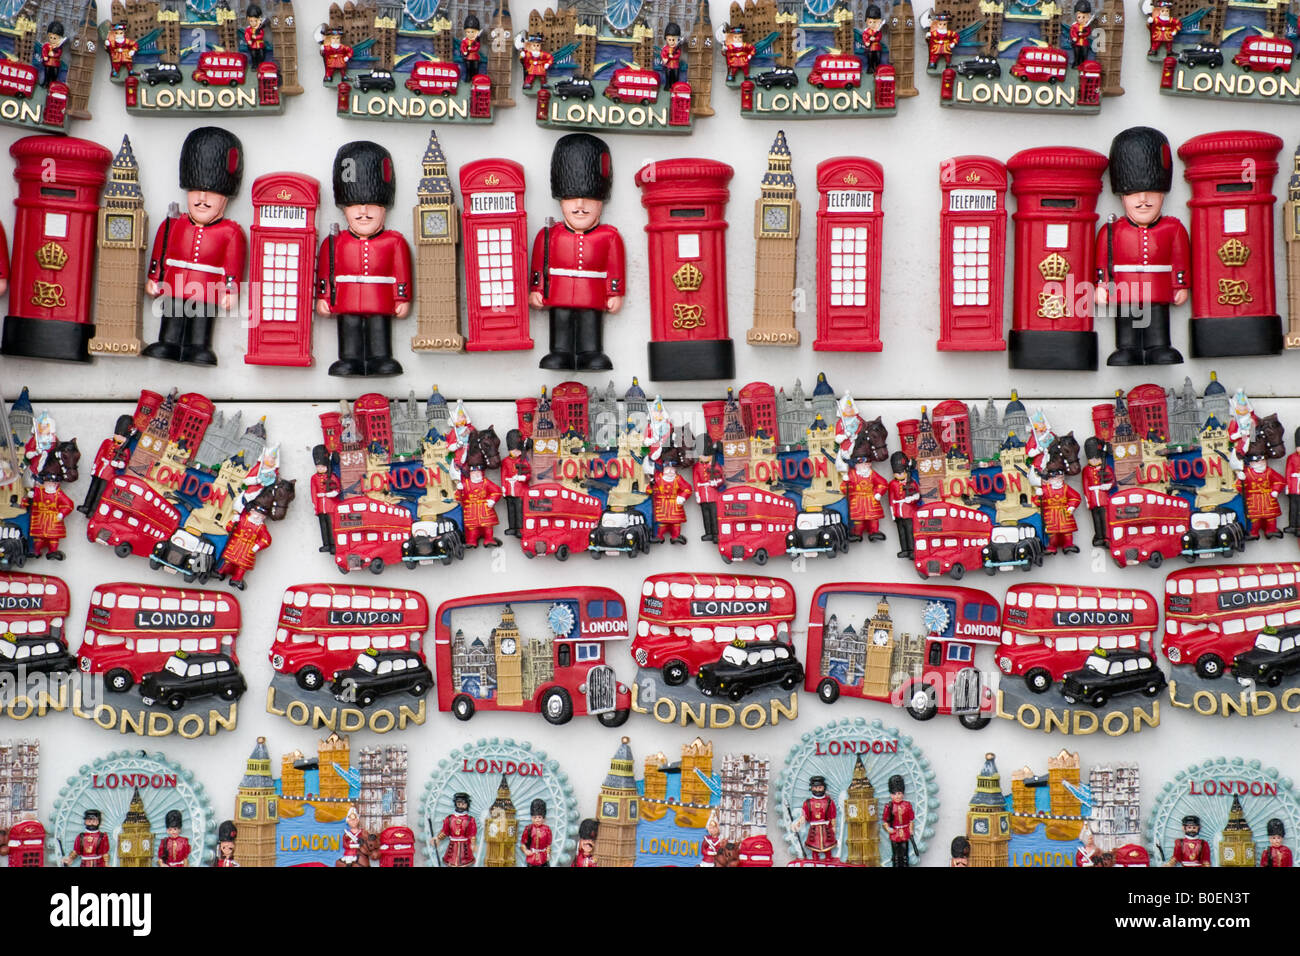 A Display Of London Tourist Souvenirs Stock Photo